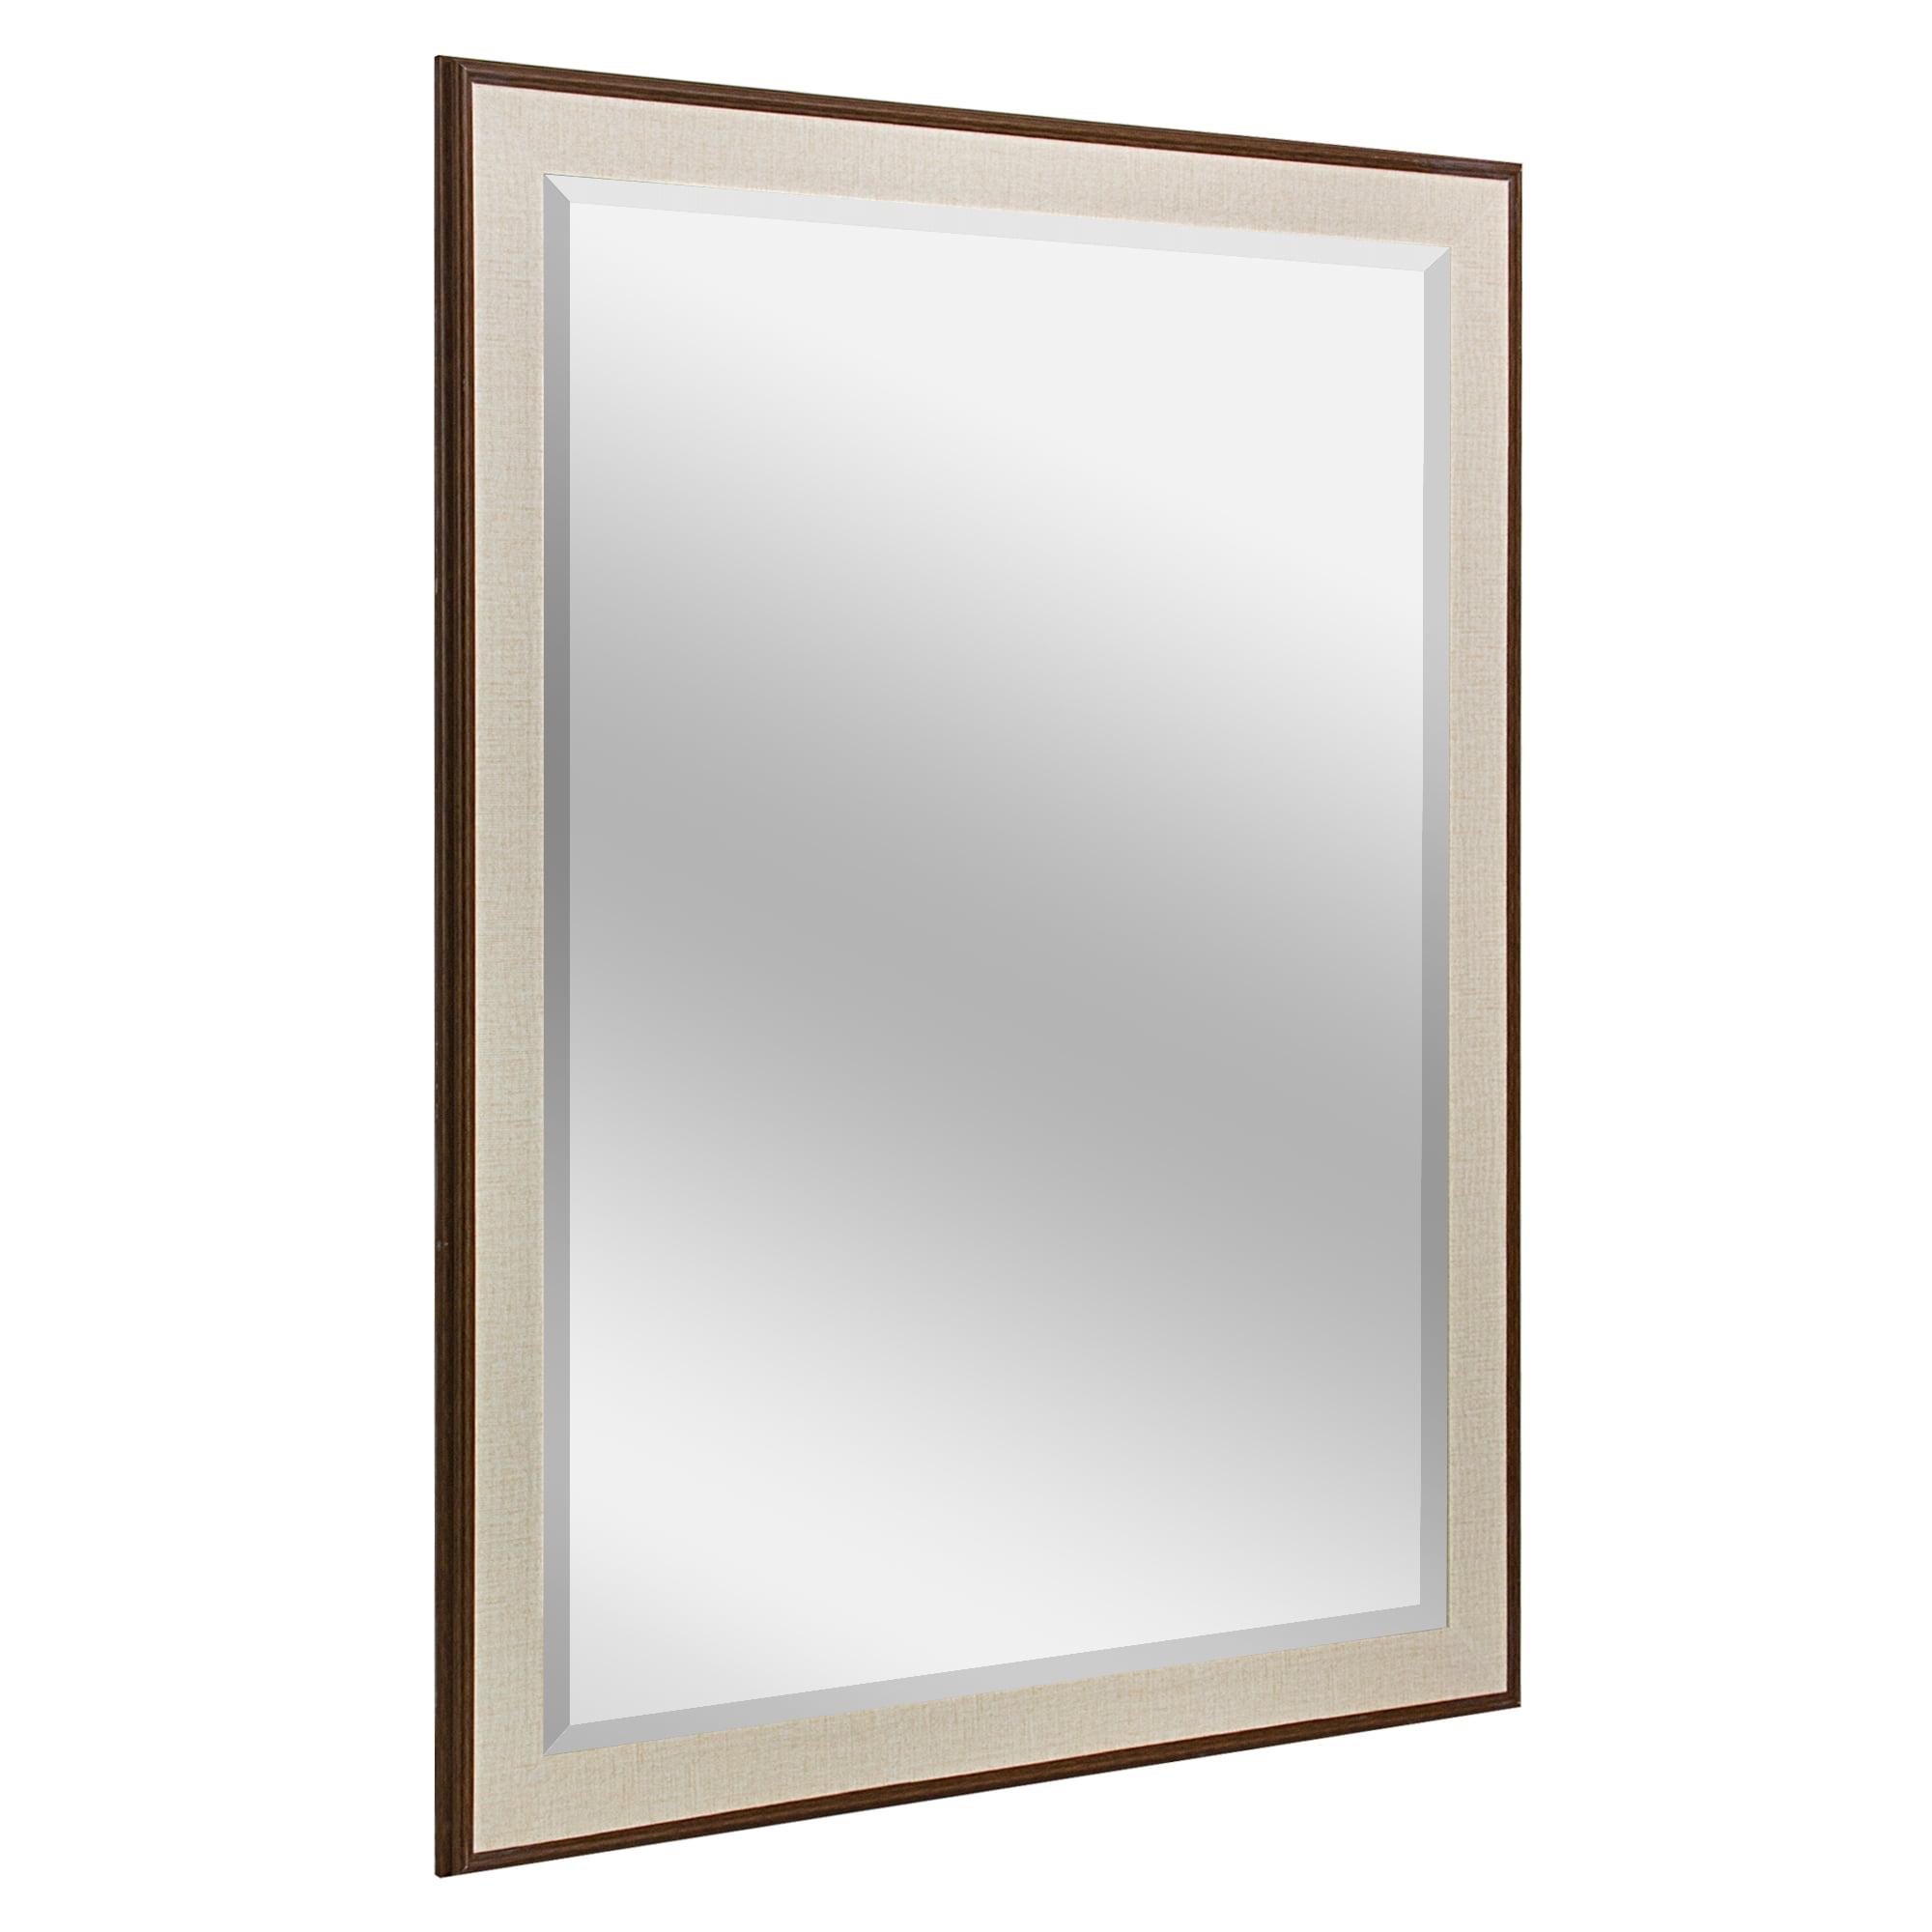 Elegant Two-Toned Brown and Cream Beveled Bathroom Vanity Mirror 35.5" x 45.5"